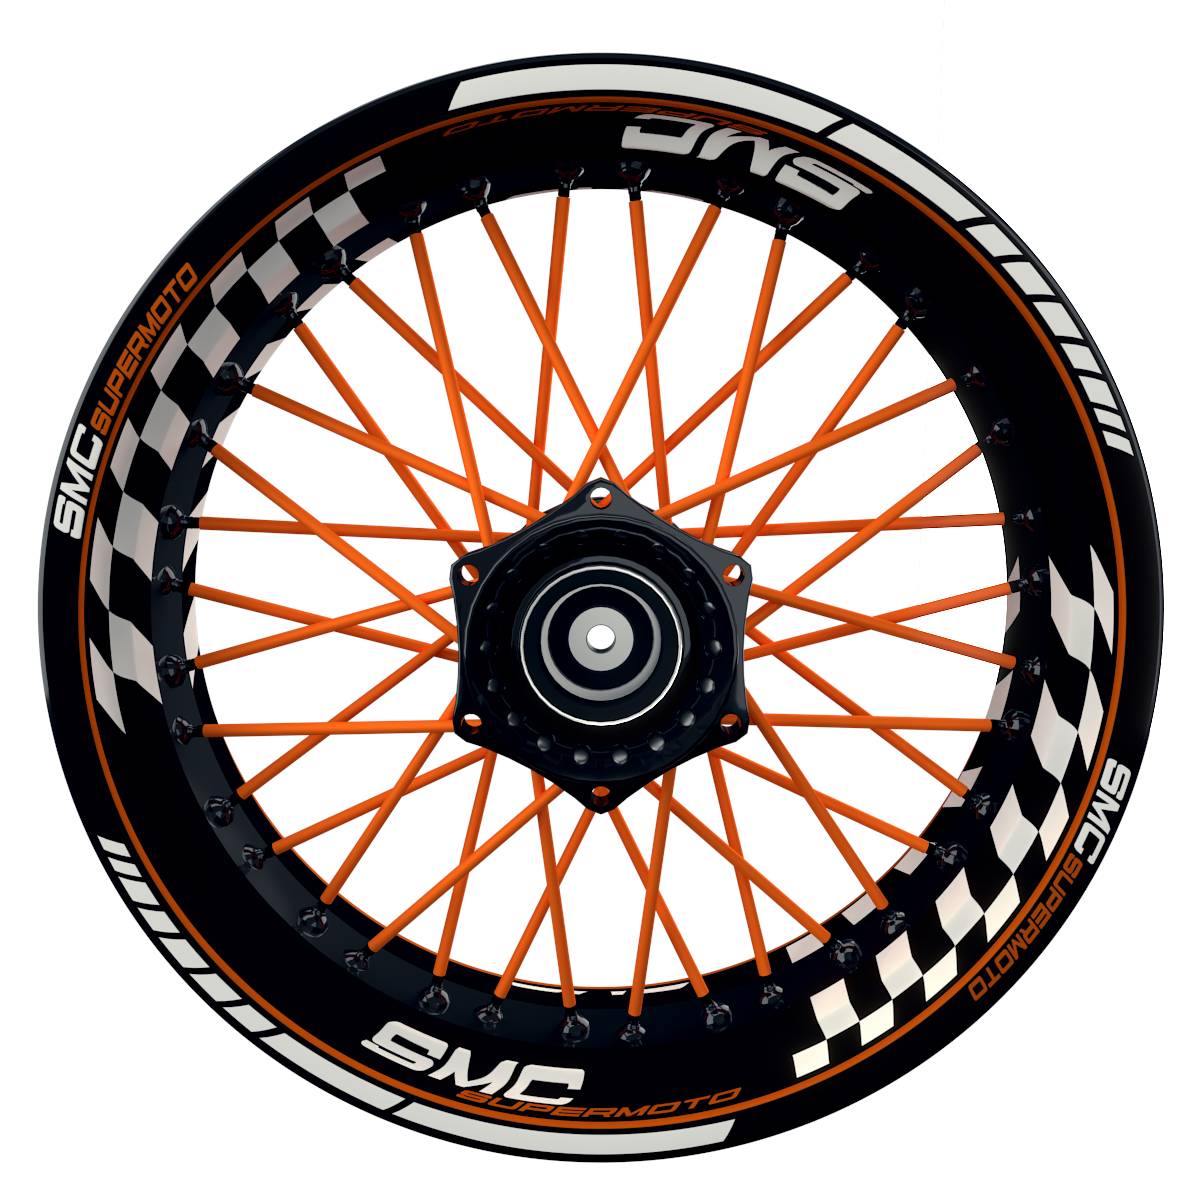 SMC Supermoto Grid schwarz orange Wheelsticker Felgenaufkleber